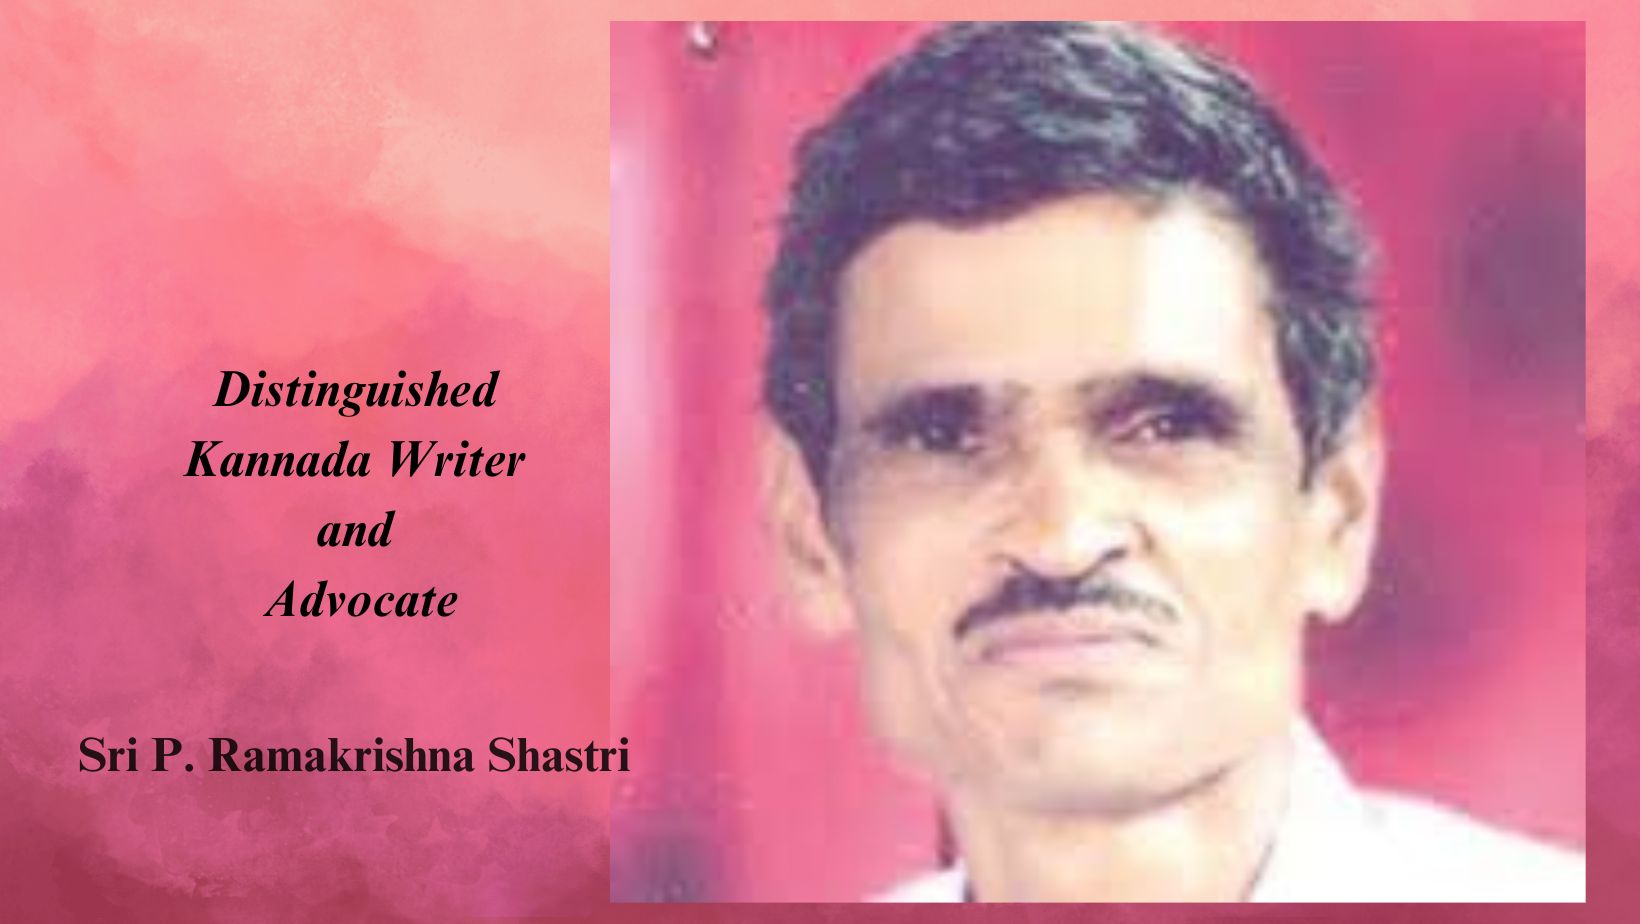 Sri P. Ramakrishna Shastri  Distinguished Kannada Writer and Advocate